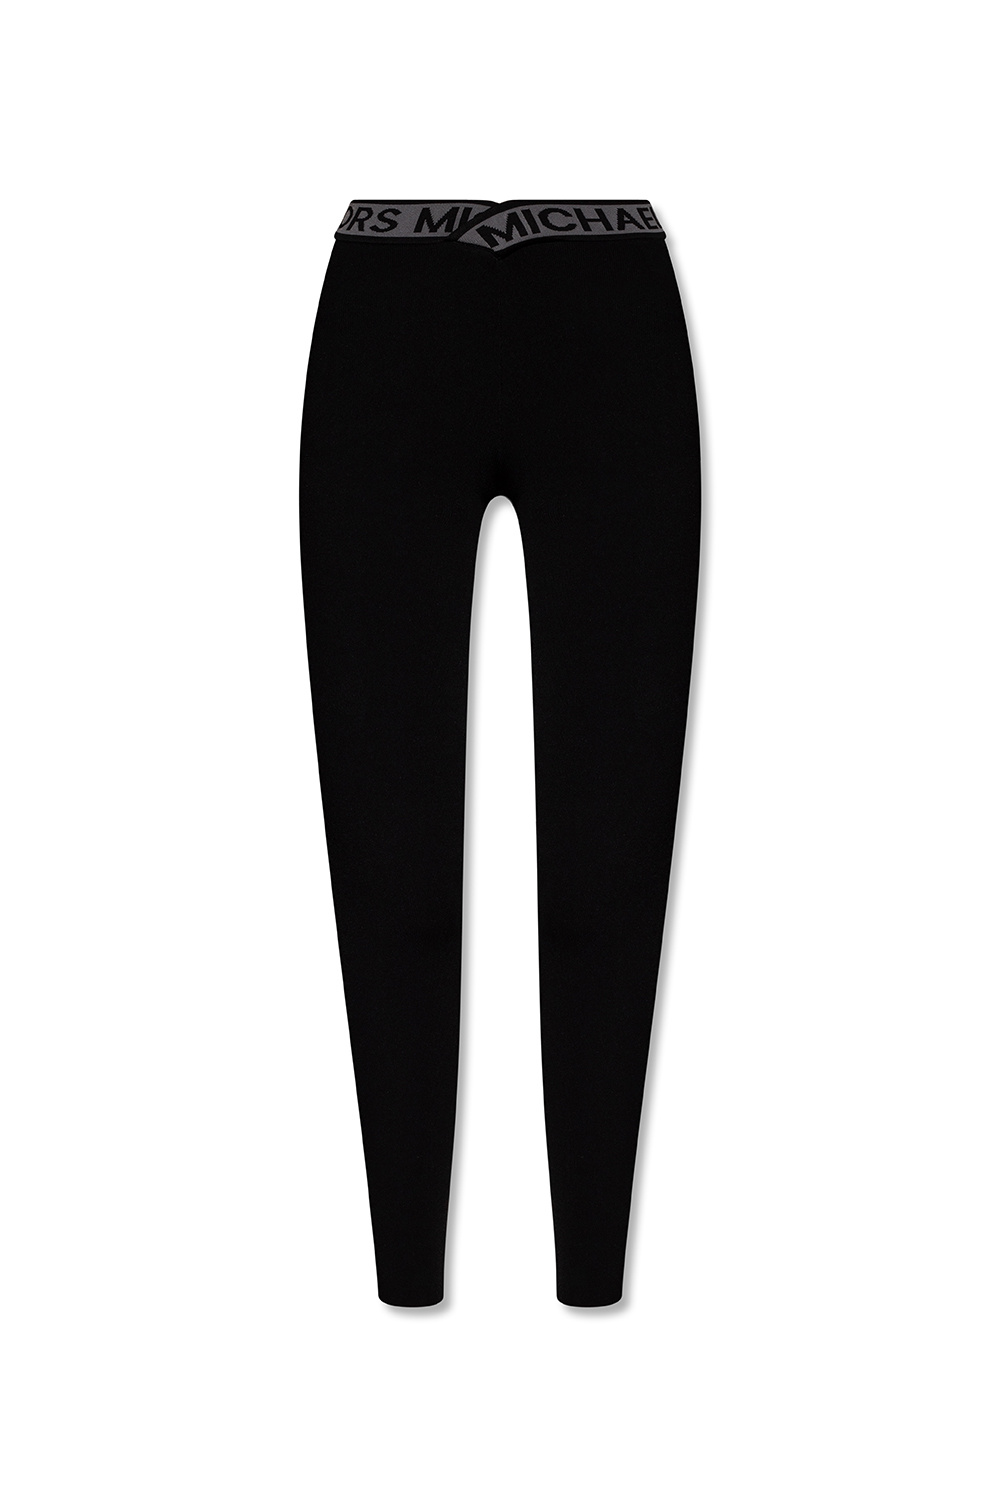 IetpShops GB - Emma taffeta shorts - Leggings with logo Michael Michael Kors